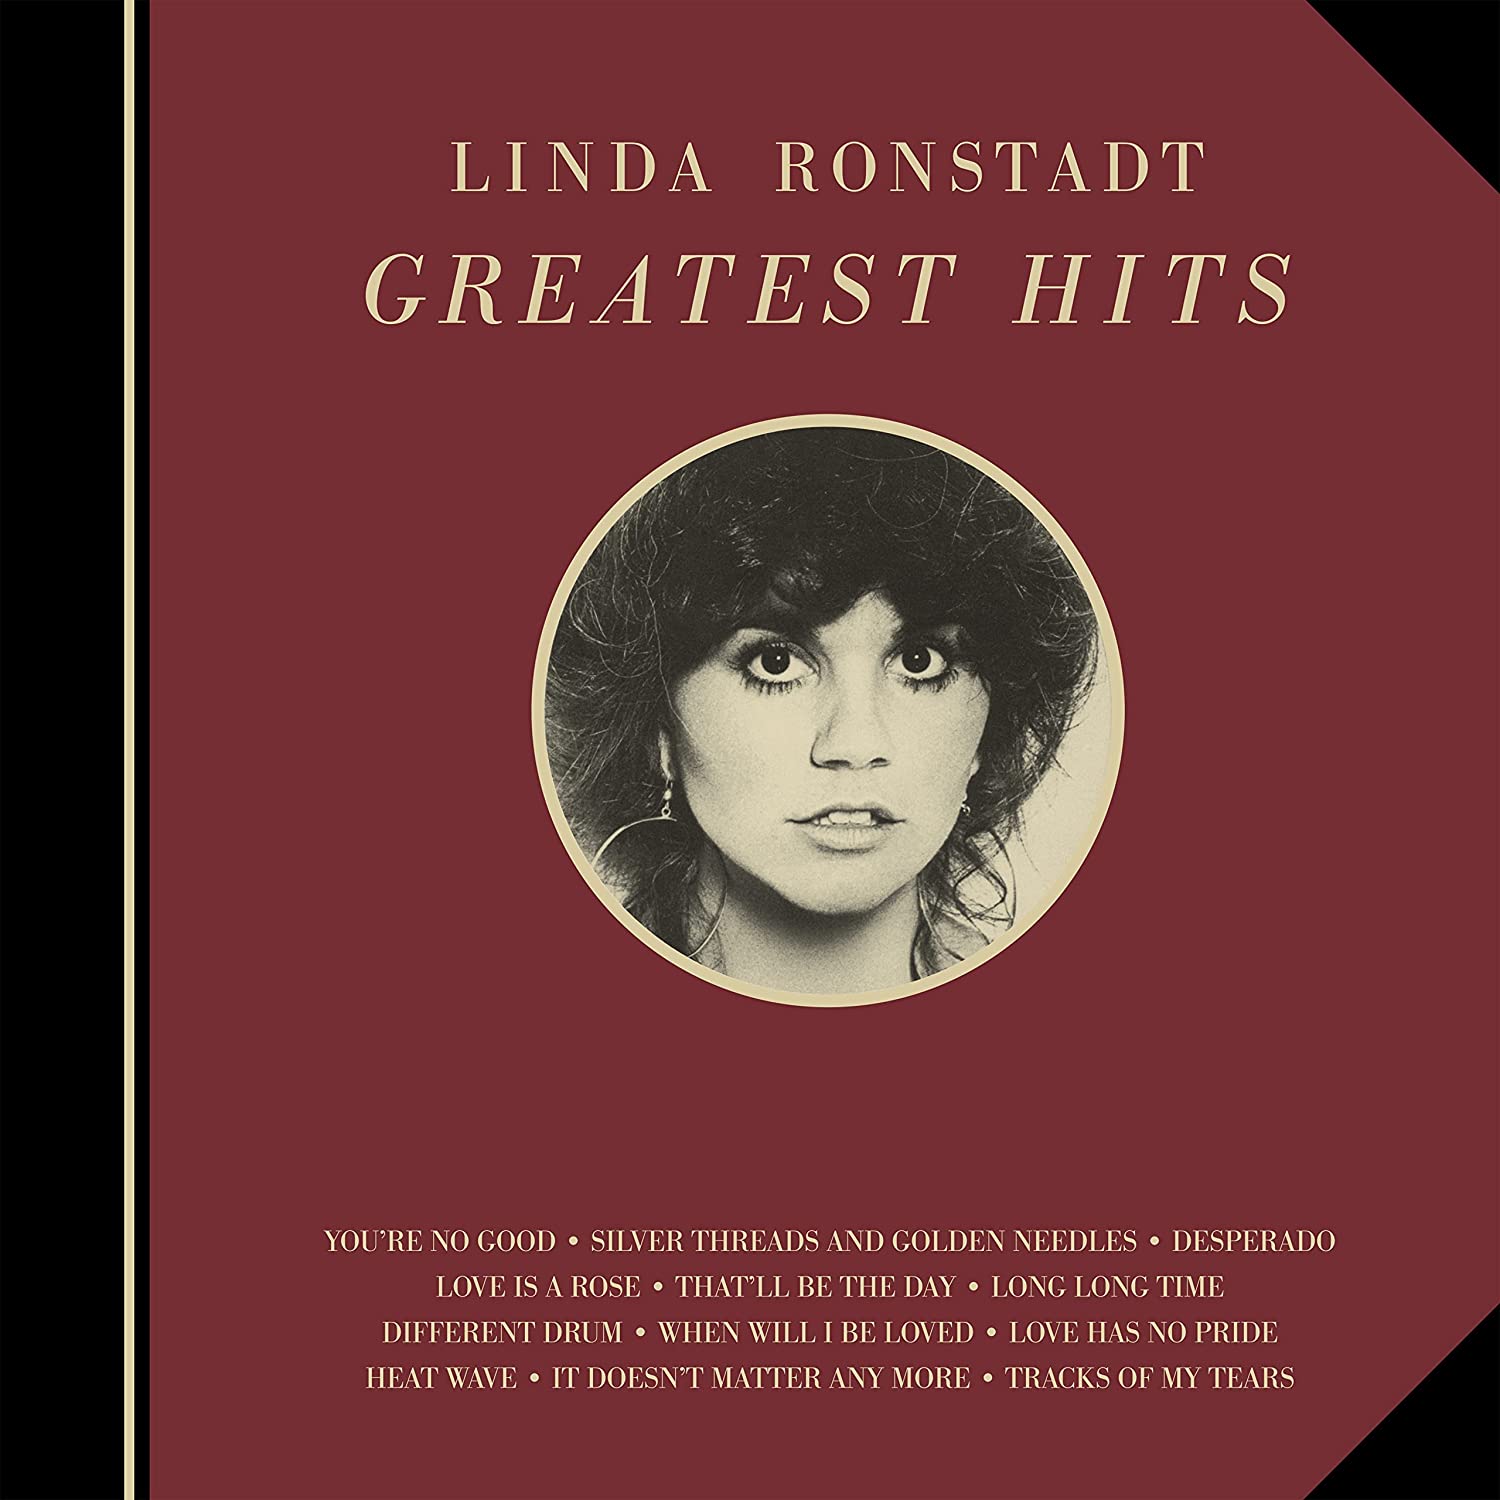 Linda Ronstadt Greatest Hits Vol. 1 Vinyl LP